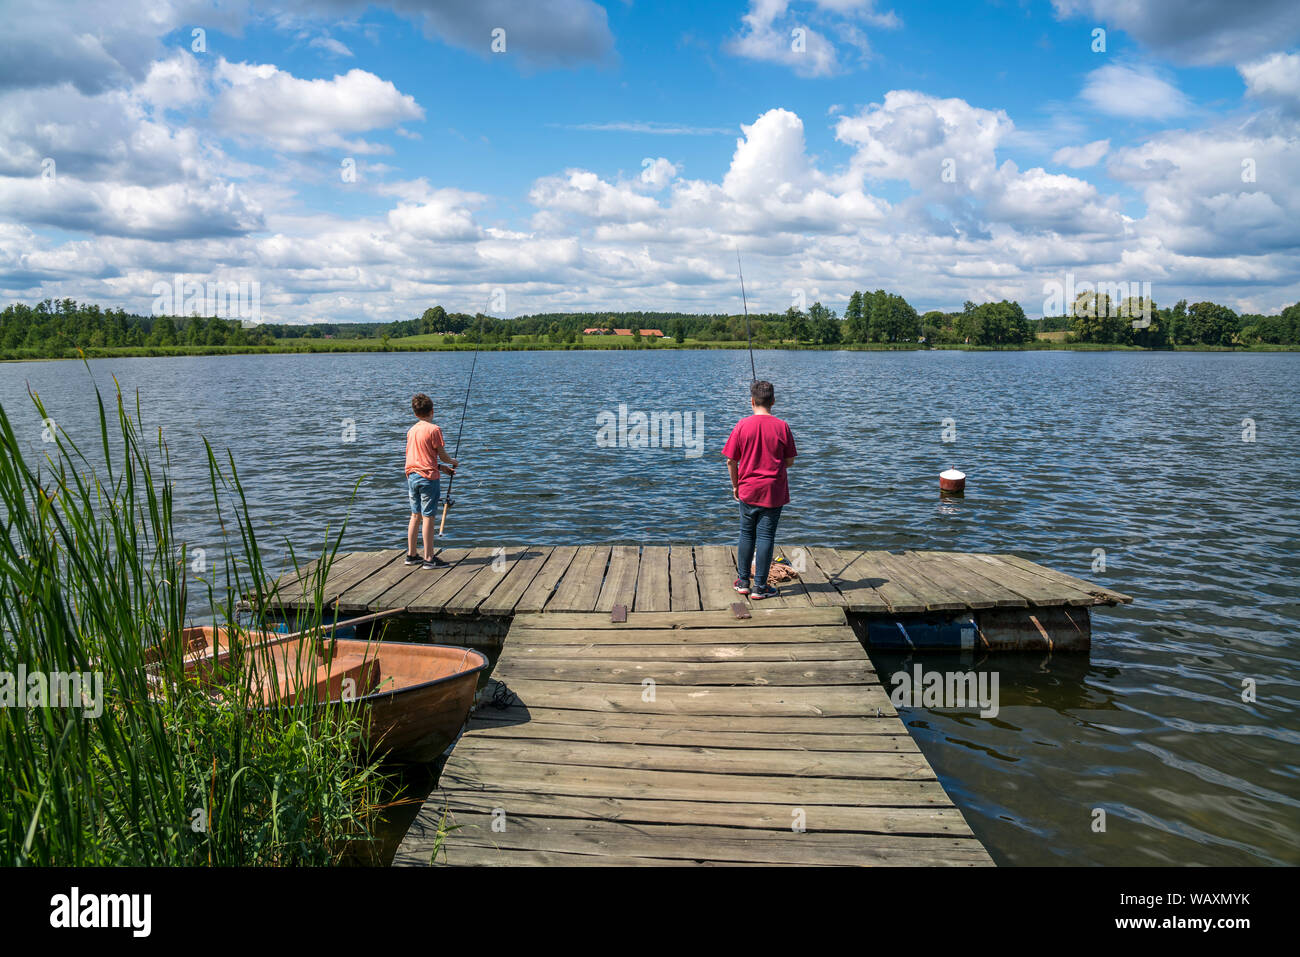 Jungen angeln am See Jezioro Dus bei Wojnowo / Eckertsdorf, Ruciane-Nida, Ermland-Masuren, Polen, Europa |  boys angling at the  lake Jezioro Dus, Woj Stock Photo